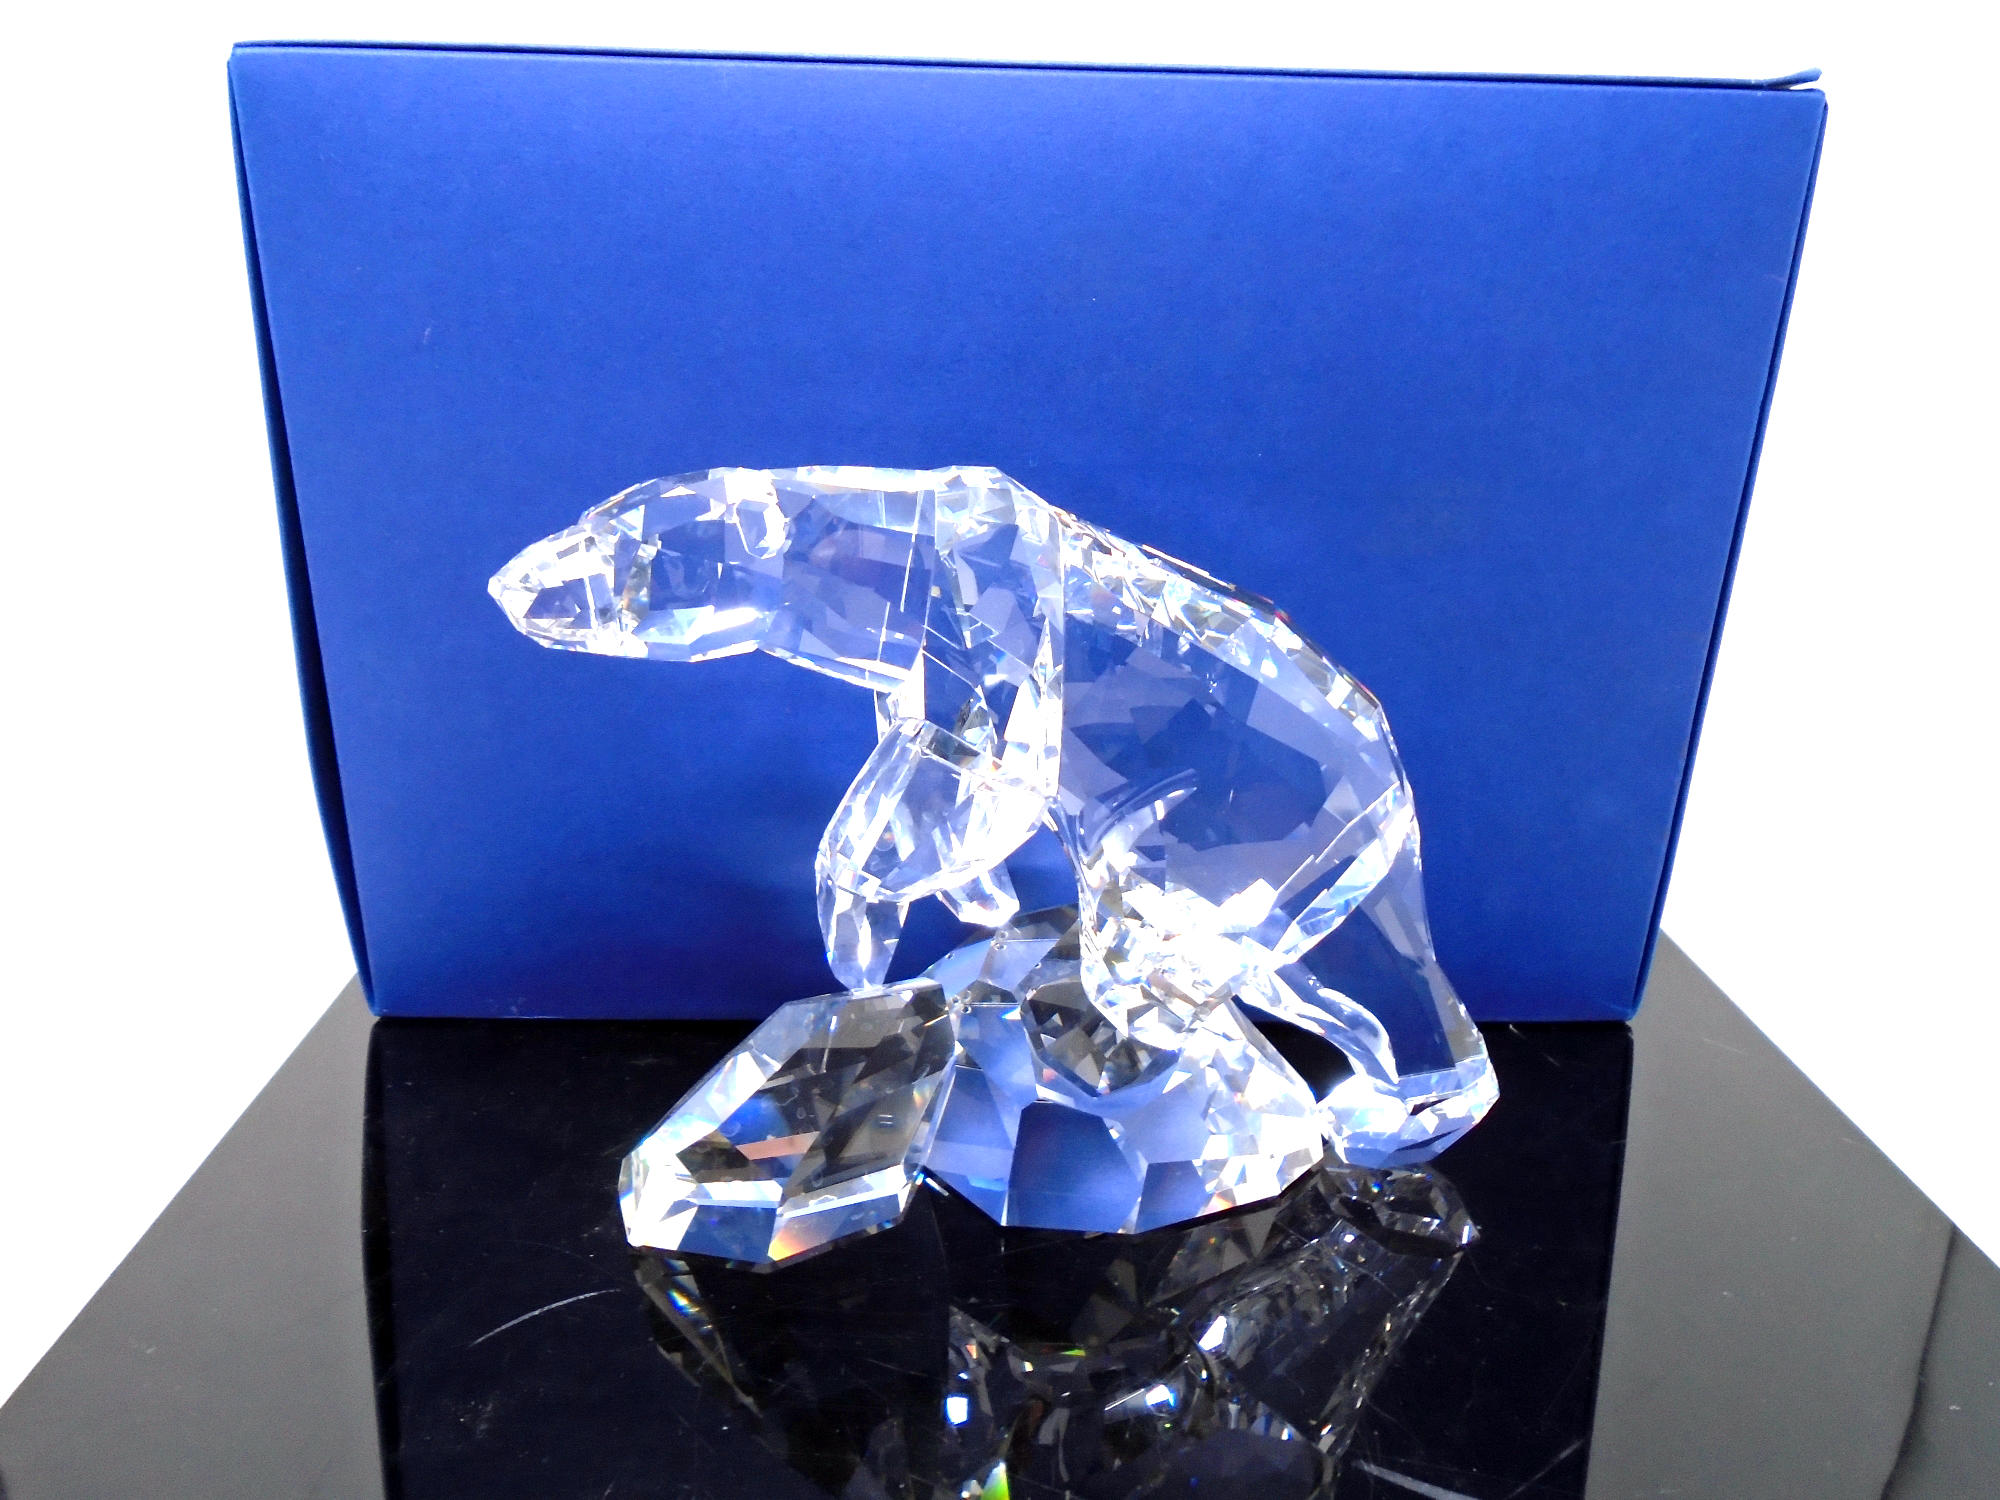 A Swarovski crystal ornament, polar bear on rock.